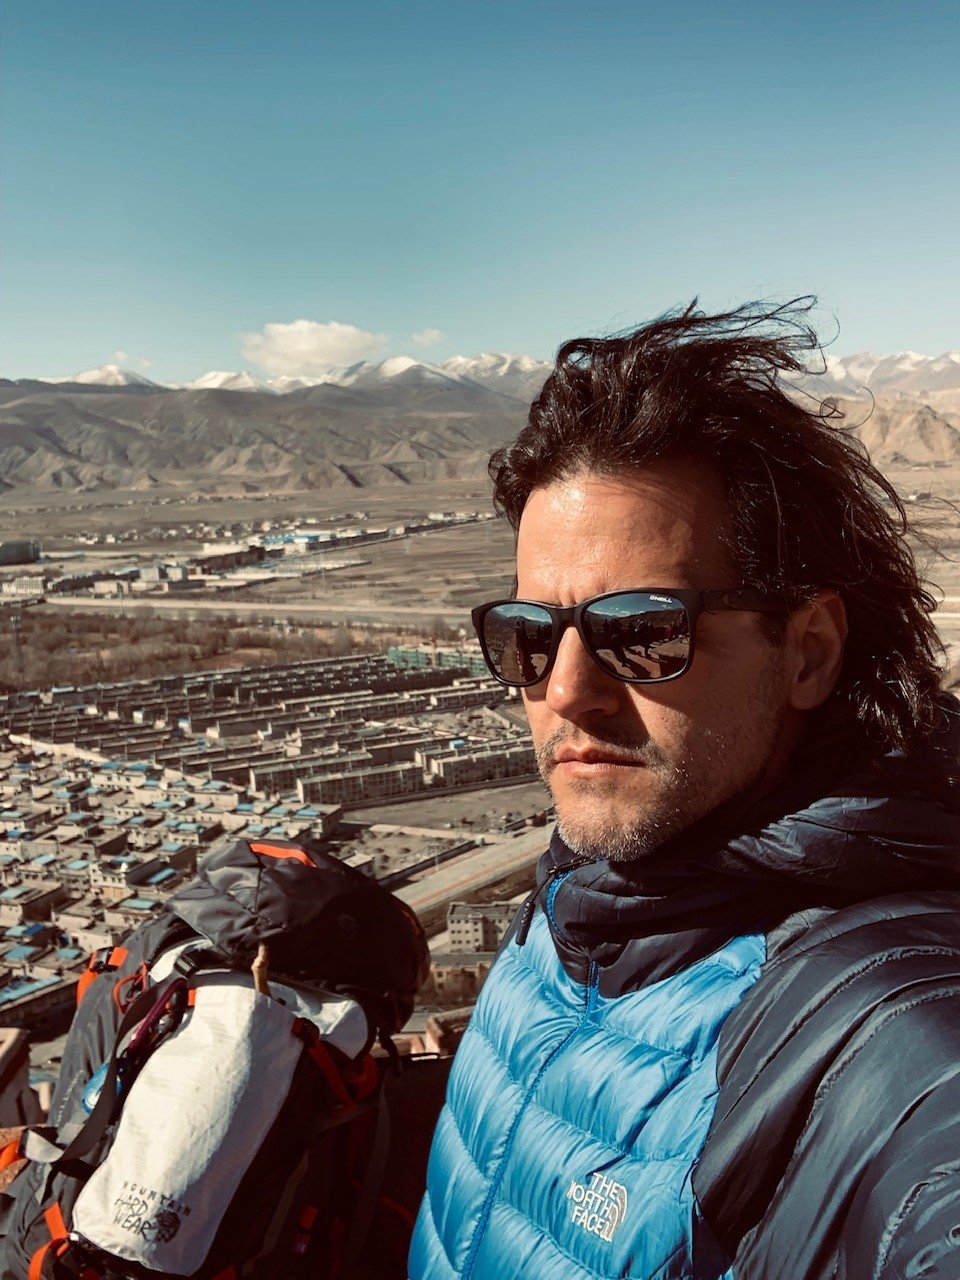 Georgios Tsianos posing on the background of Gyantse, Tibet.